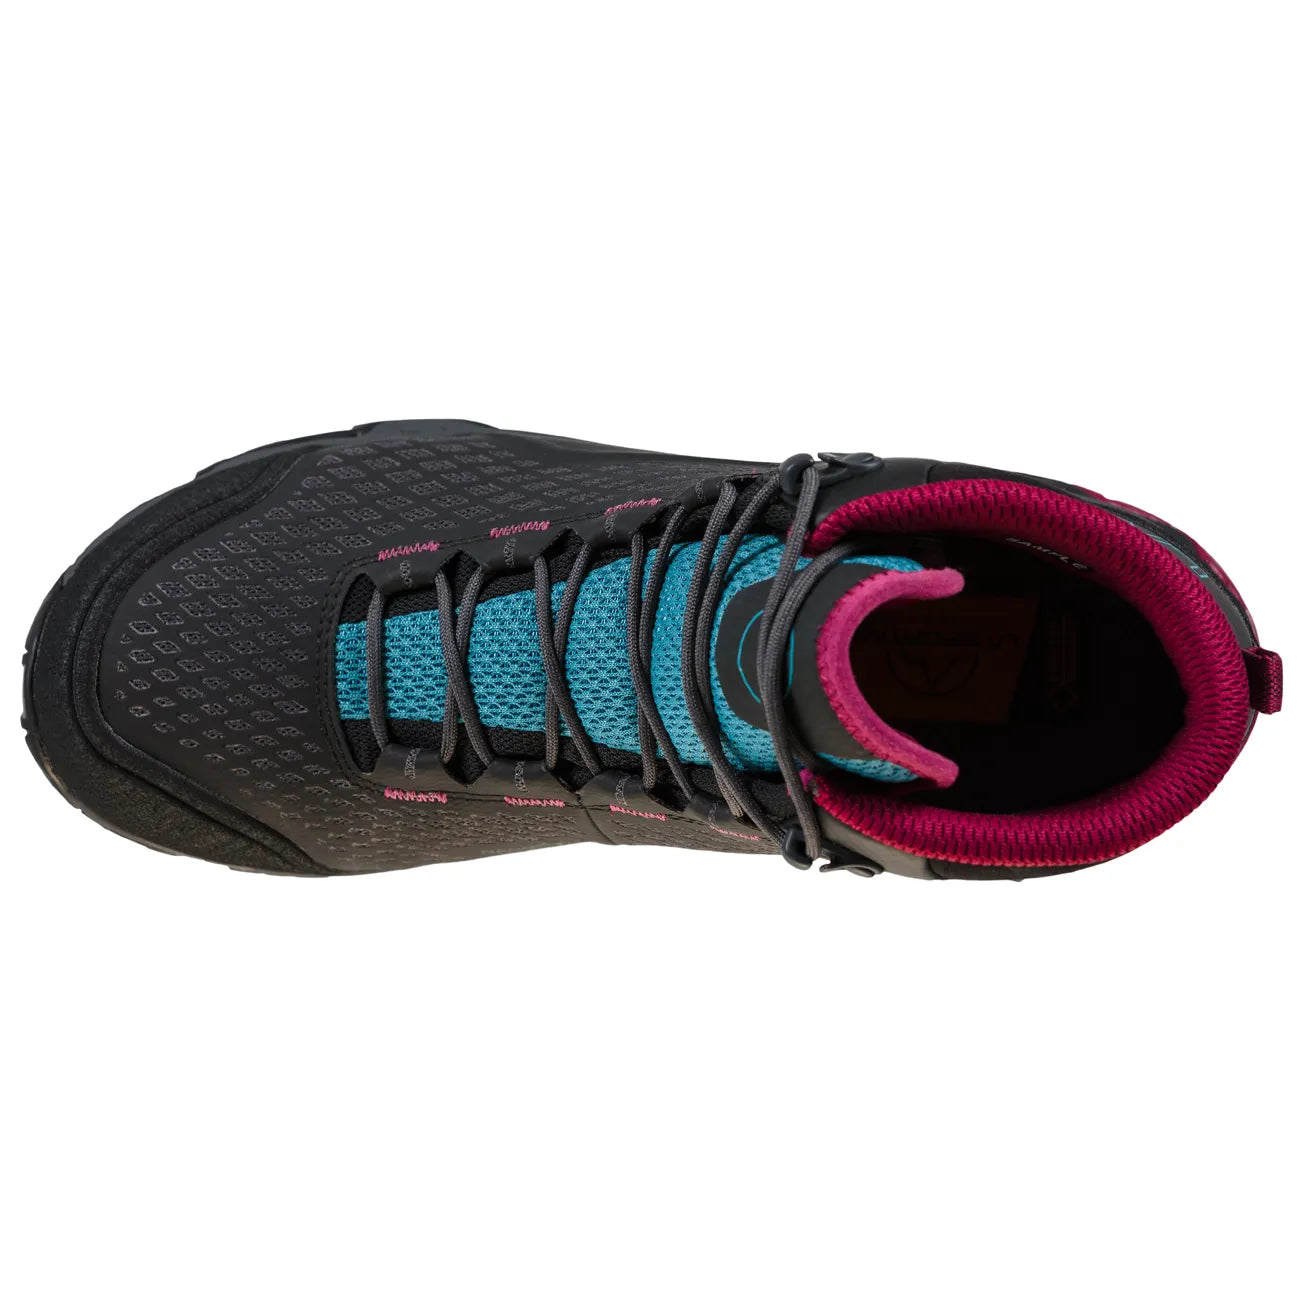 La Sportiva Stream GTX Mid Hiking Boot Women's - Find Your Feet Australia Hobart Launceston Tasmania